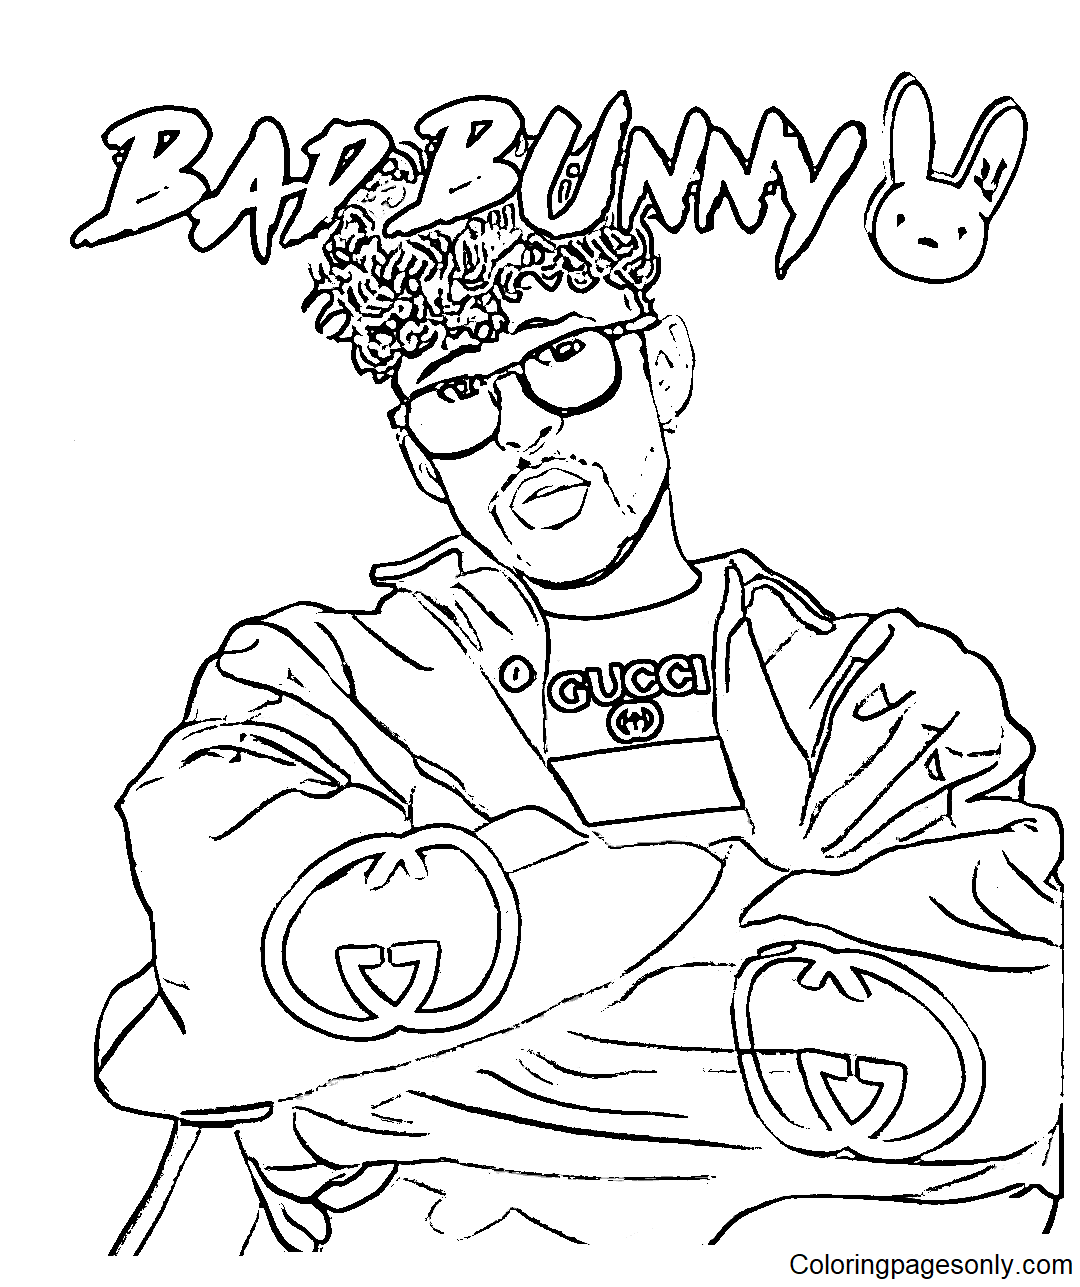 Bad Bunny Rapper Singer Coloring Page